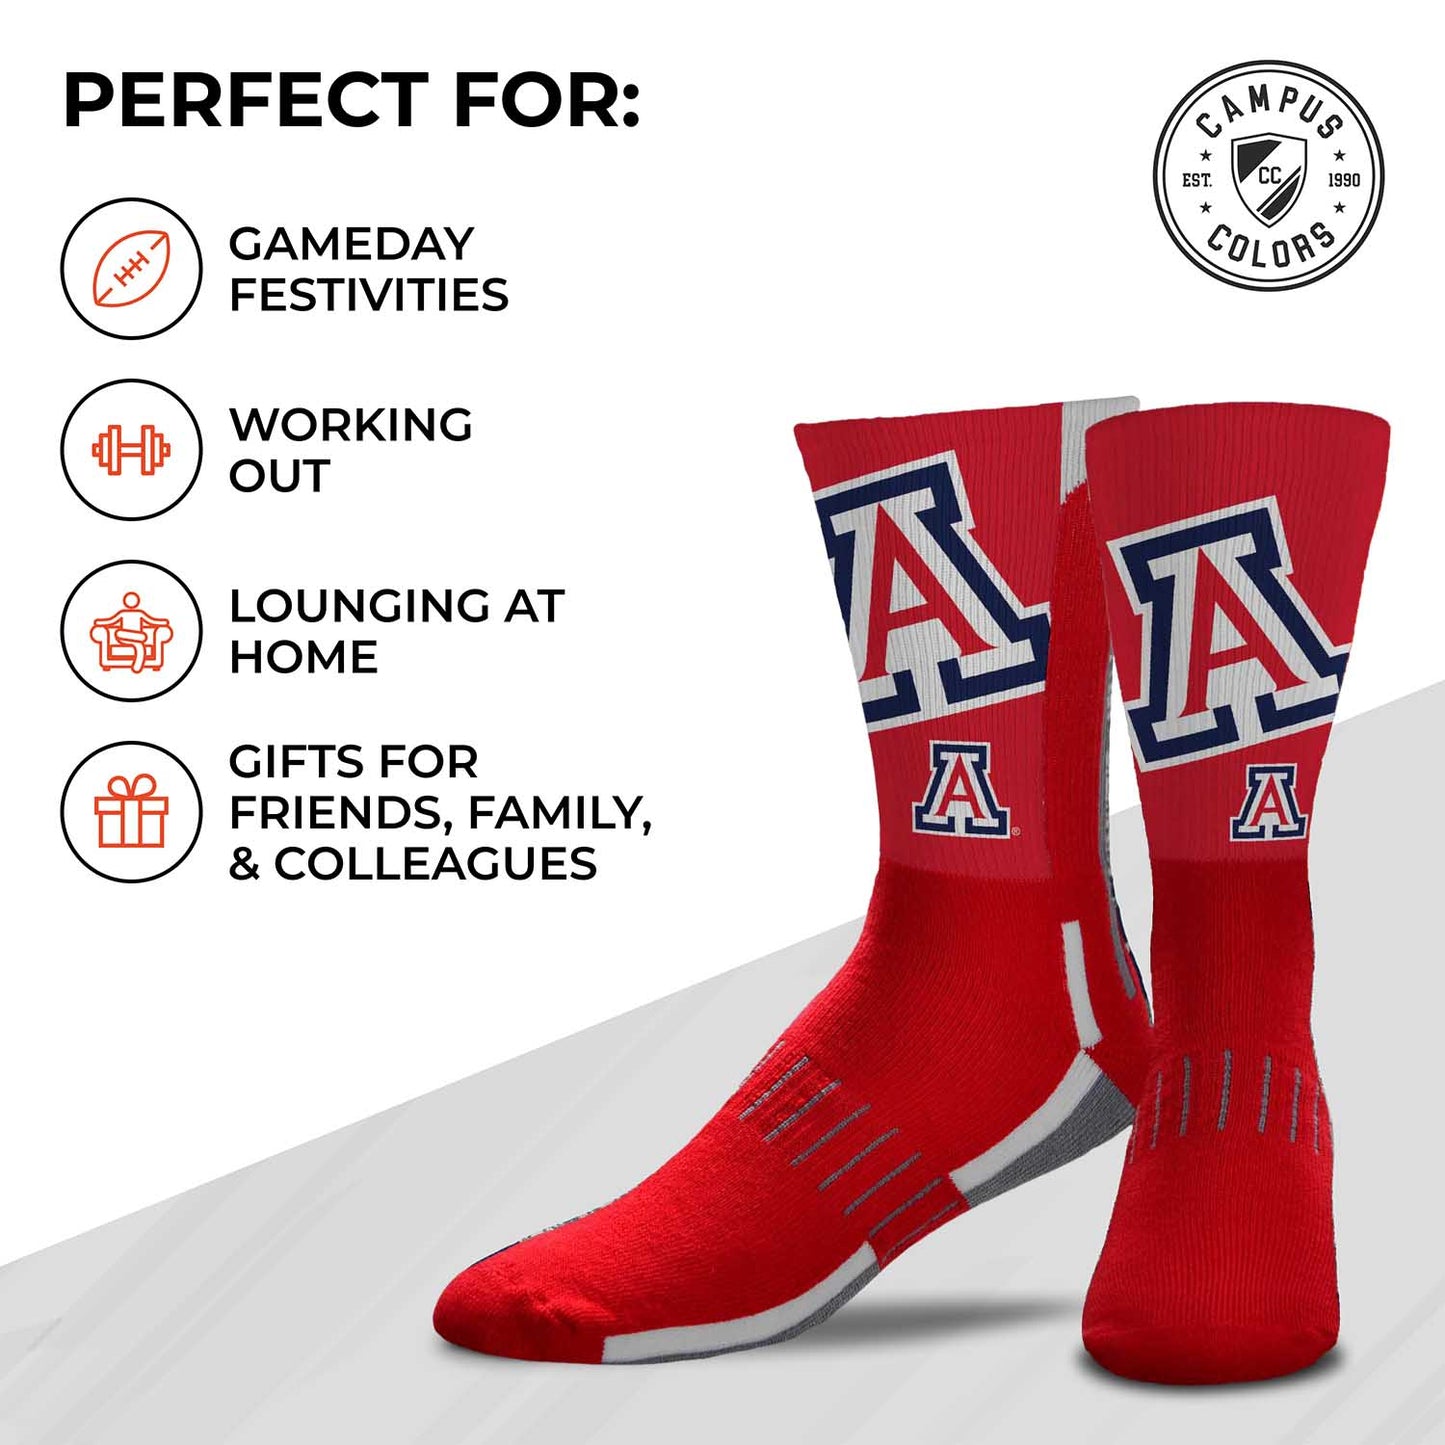 Arizona Wildcats NCAA Youth University Socks - Team Color